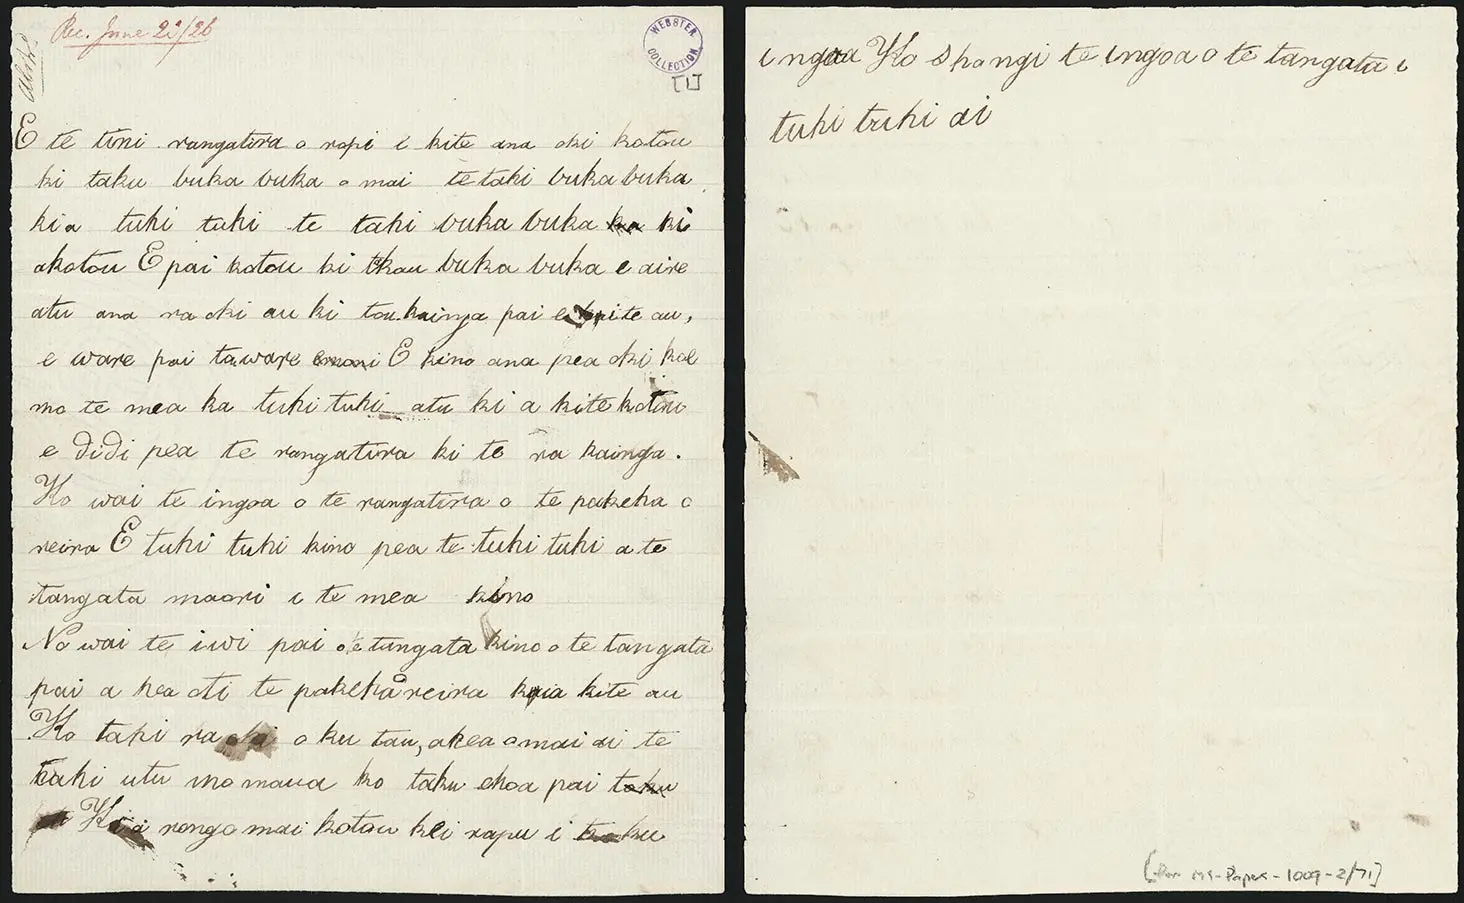 Photo of Eruera's letter handwritten in te reo Māori.